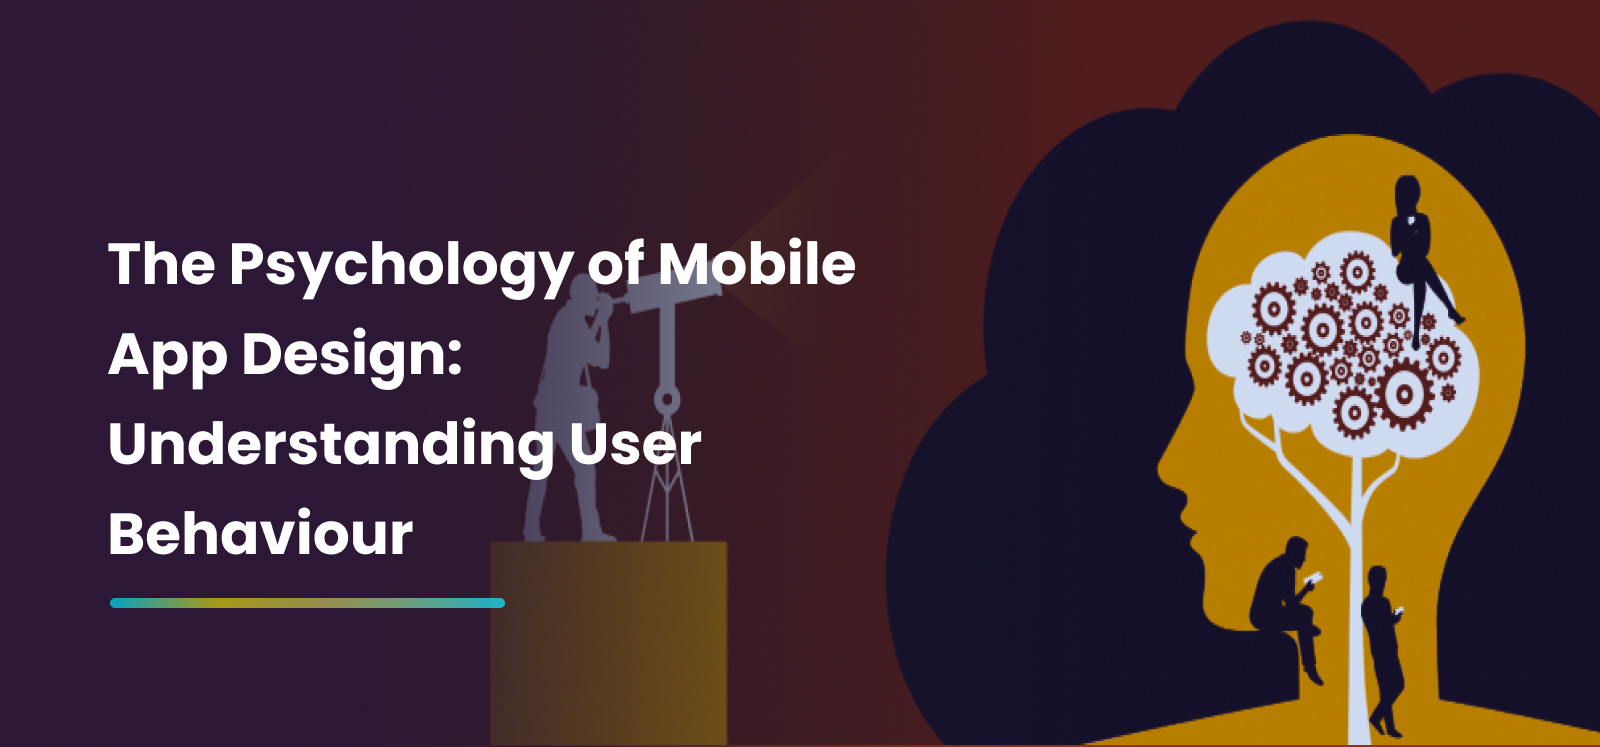 The Psychology of Mobile App Design: Understanding User Behaviour